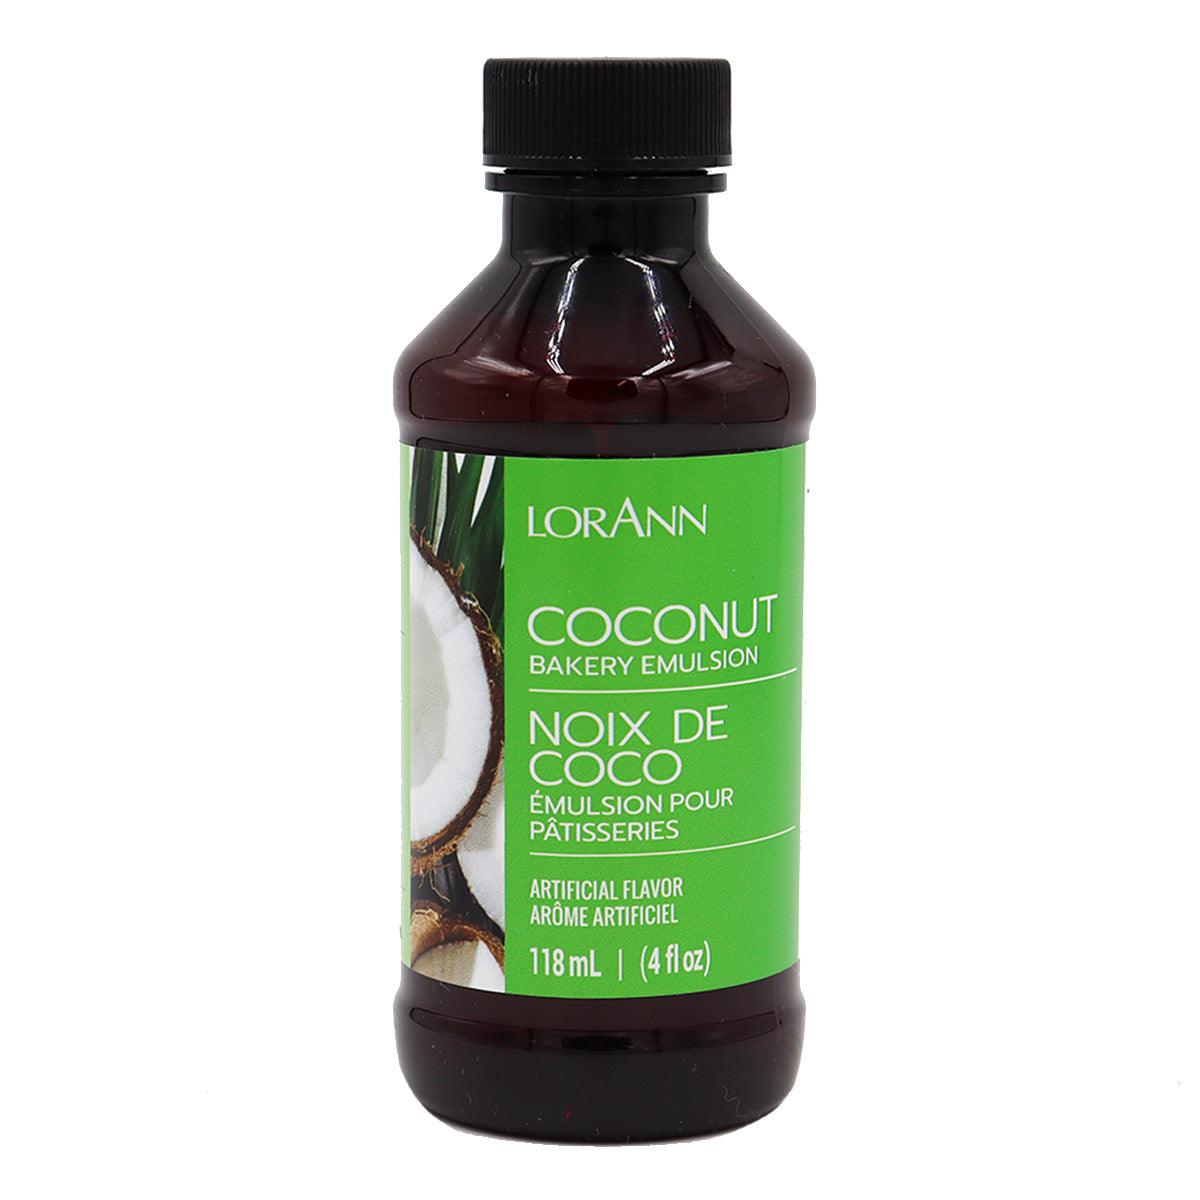 Coconut Bakery Emulsion 4 fl oz (118ml) - ViaCheff.com